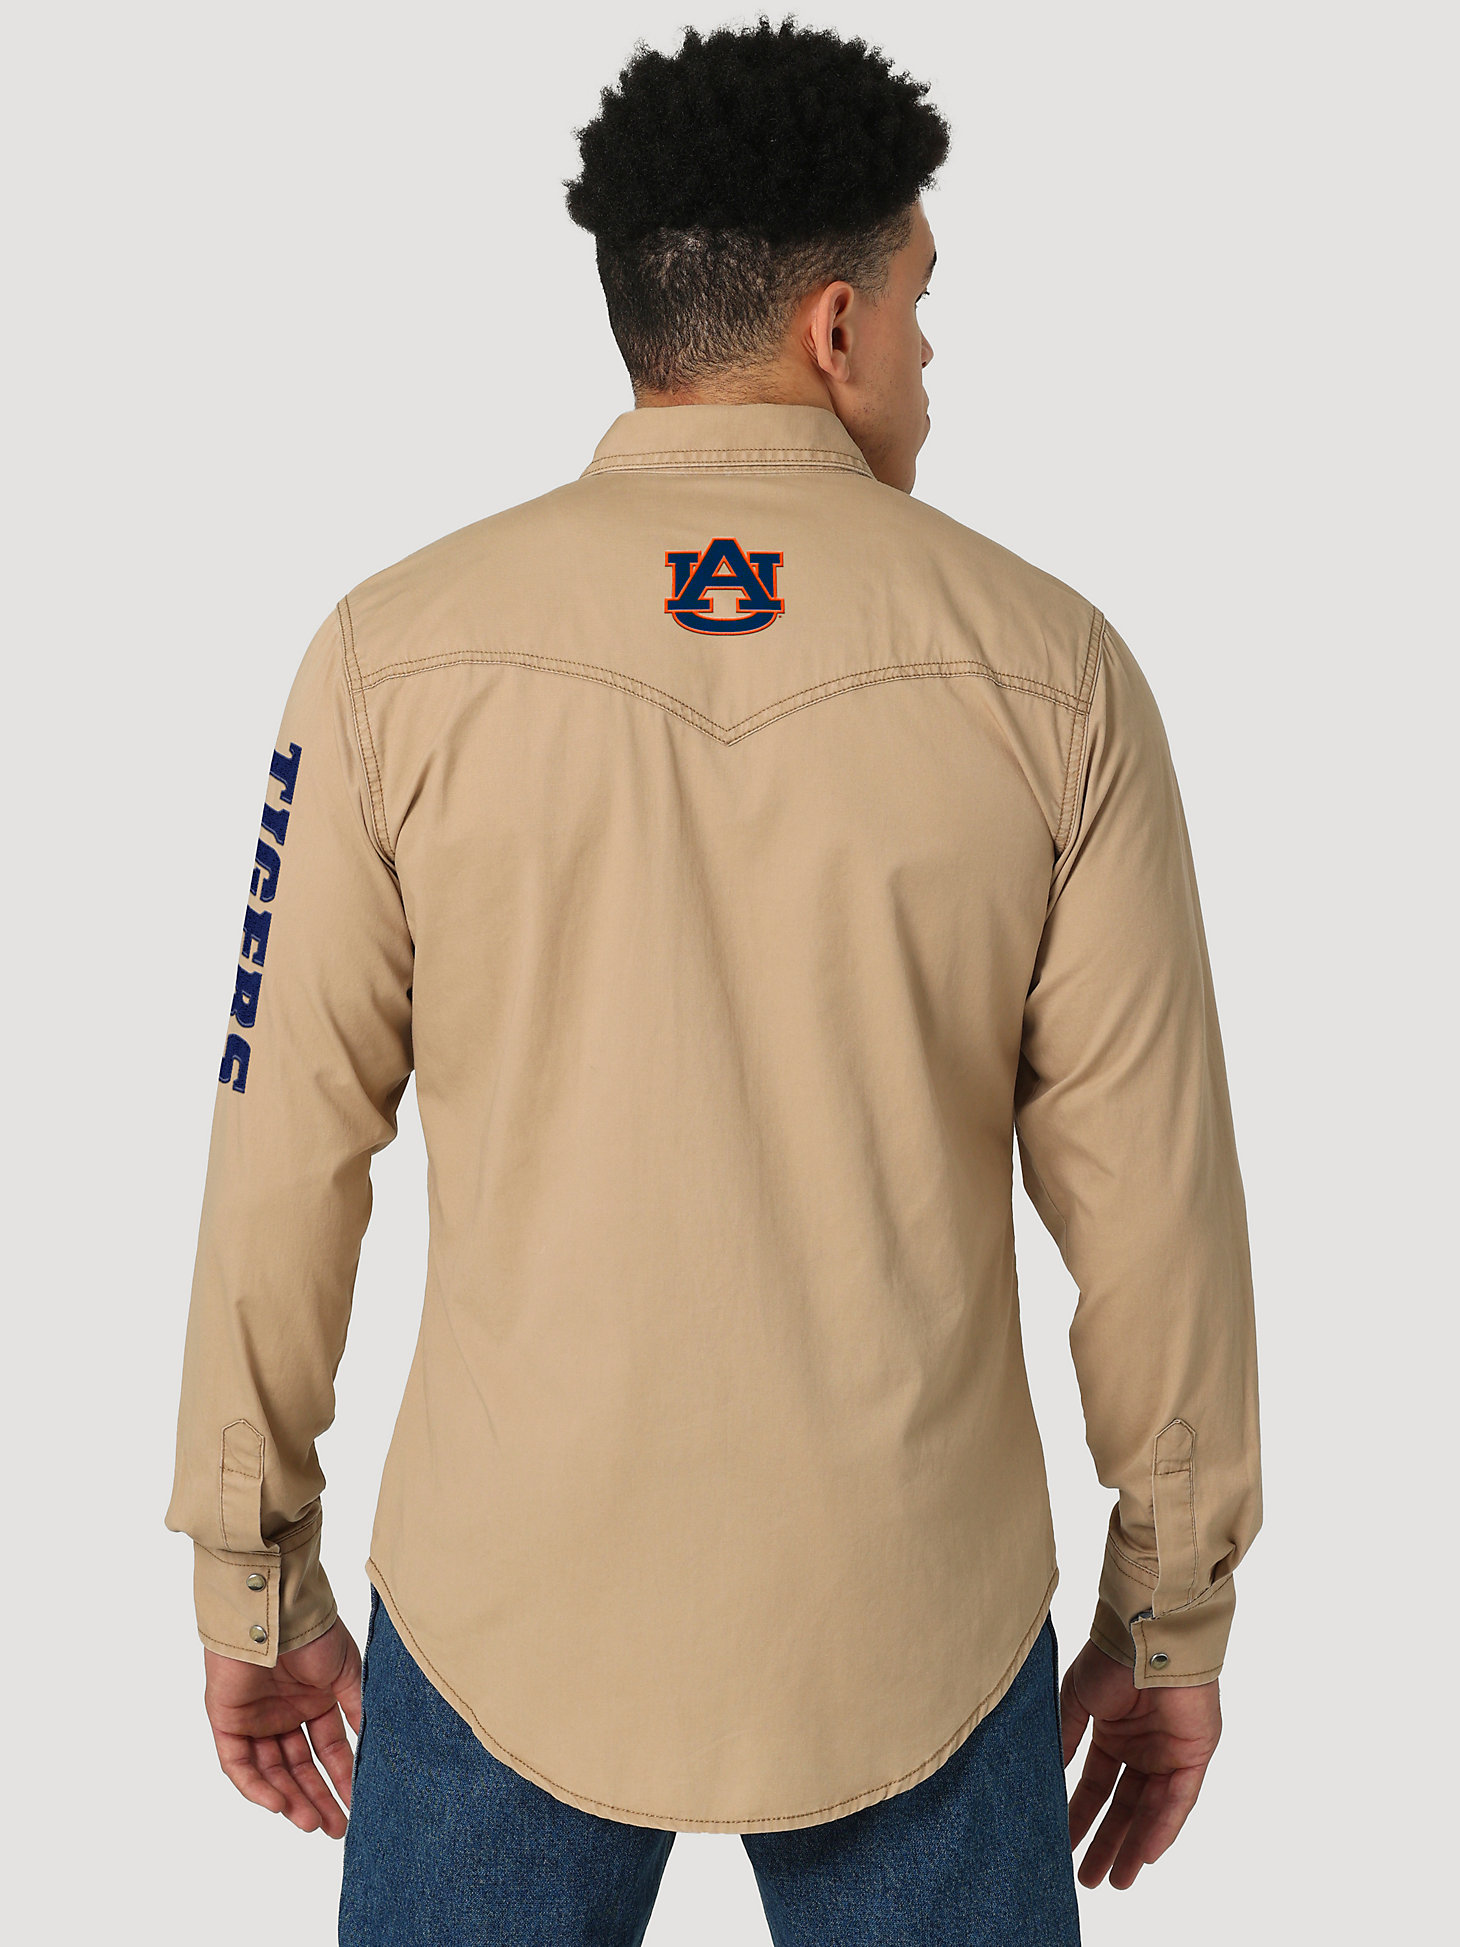 Wrangler Collegiate Embroidered Twill Western Snap Shirt in Auburn University alternative view 2